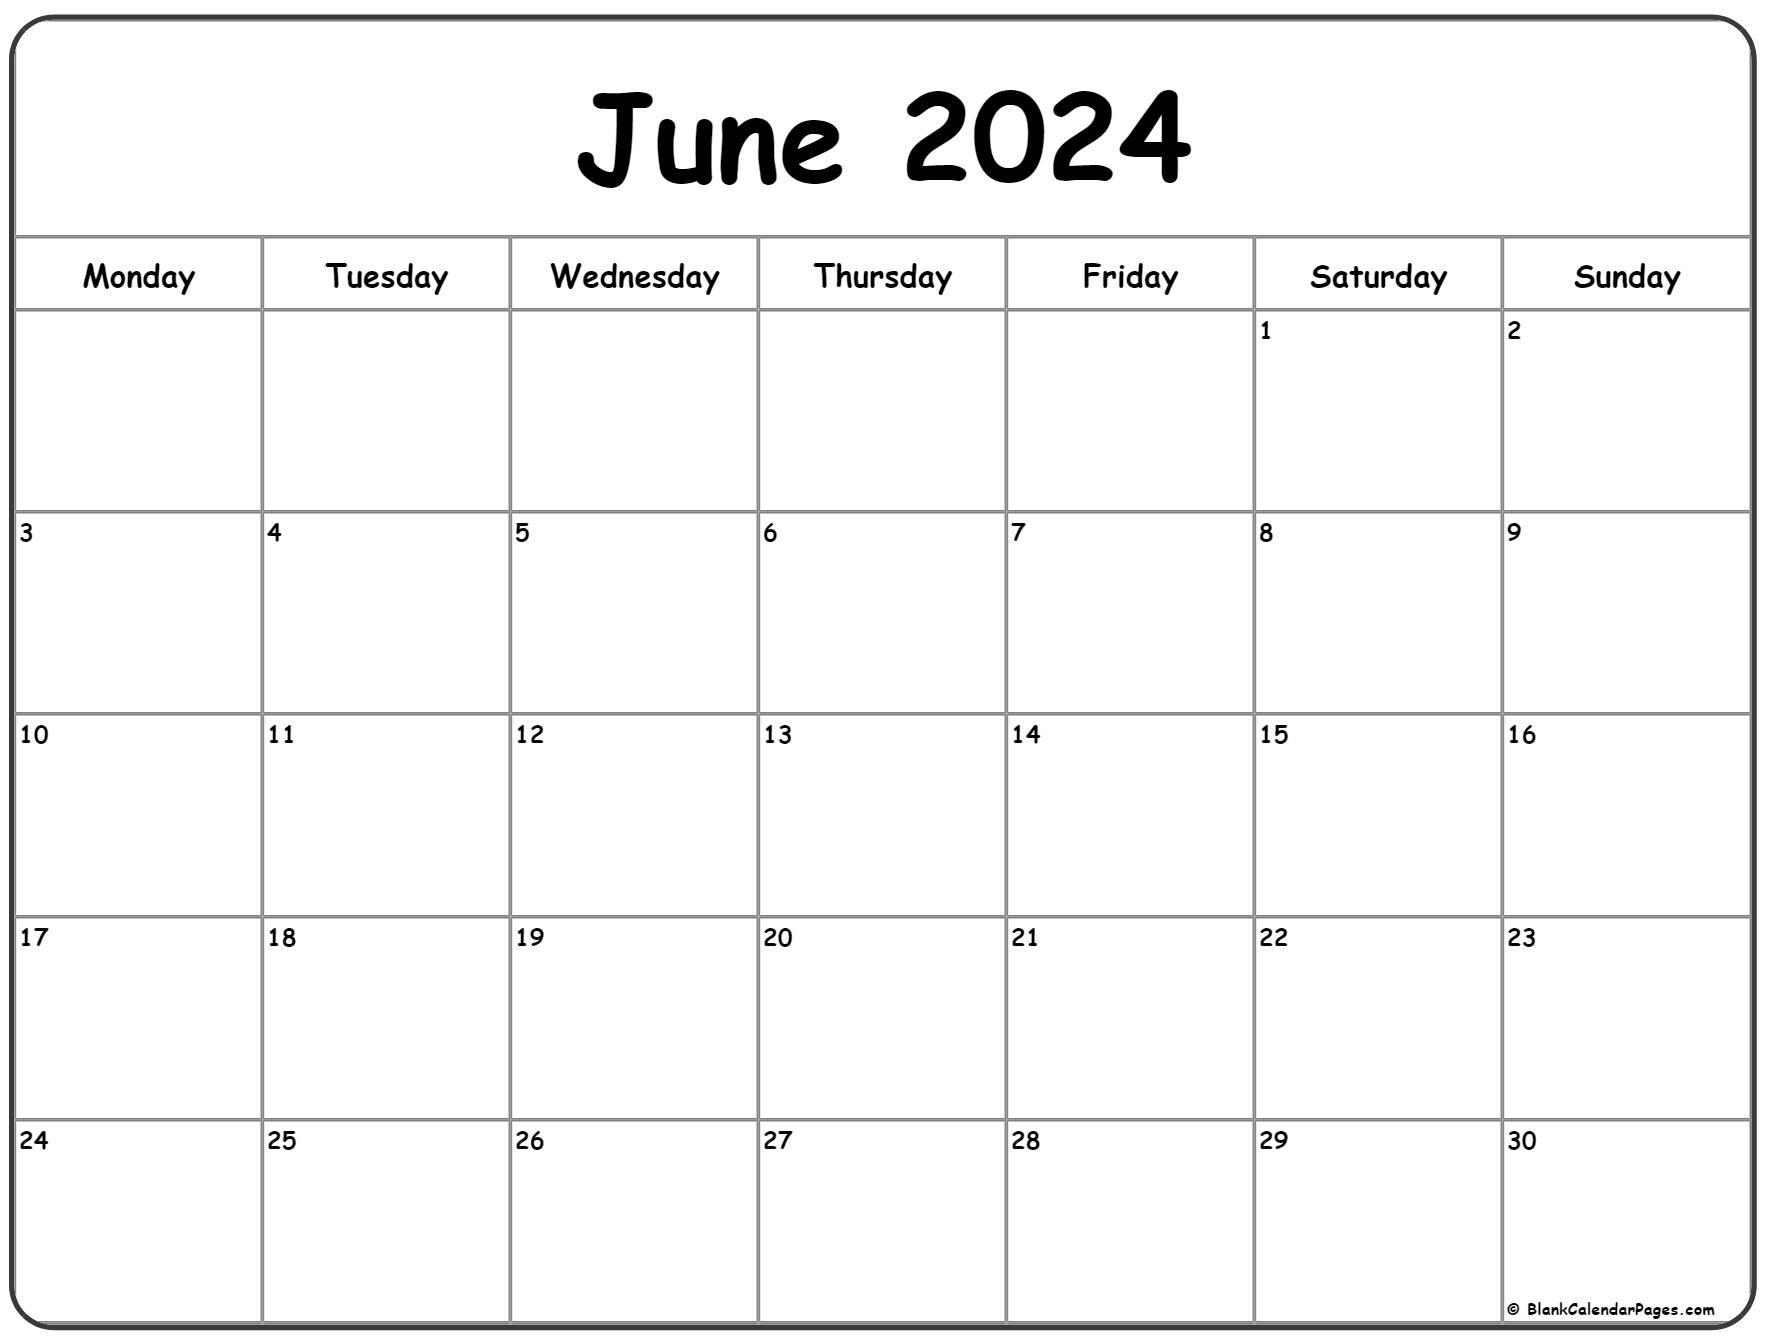 June 2024 Monday Calendar | Monday To Sunday for Calendar Of June 2024